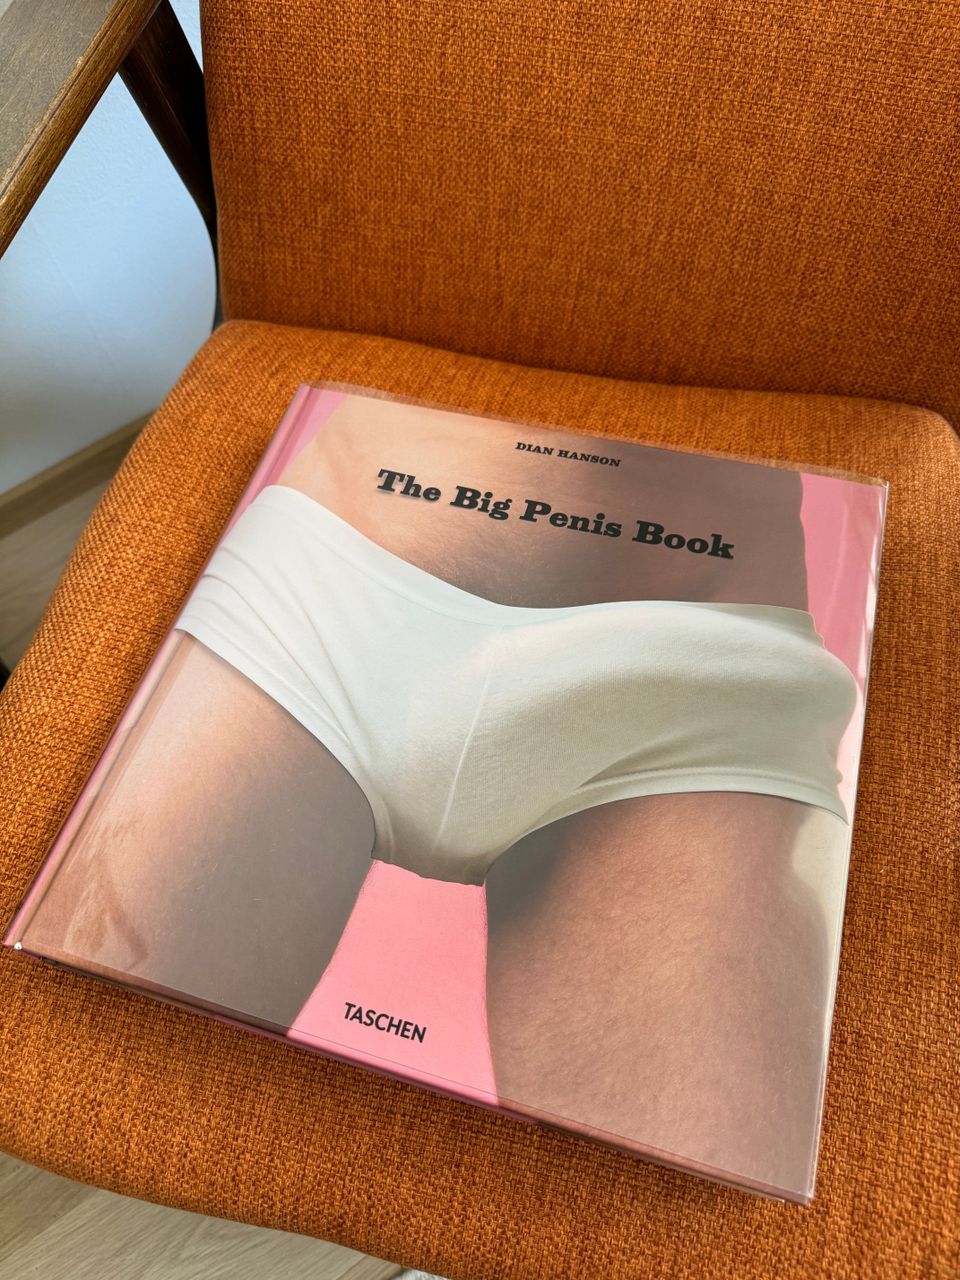 The Big Penis Book / Taschen